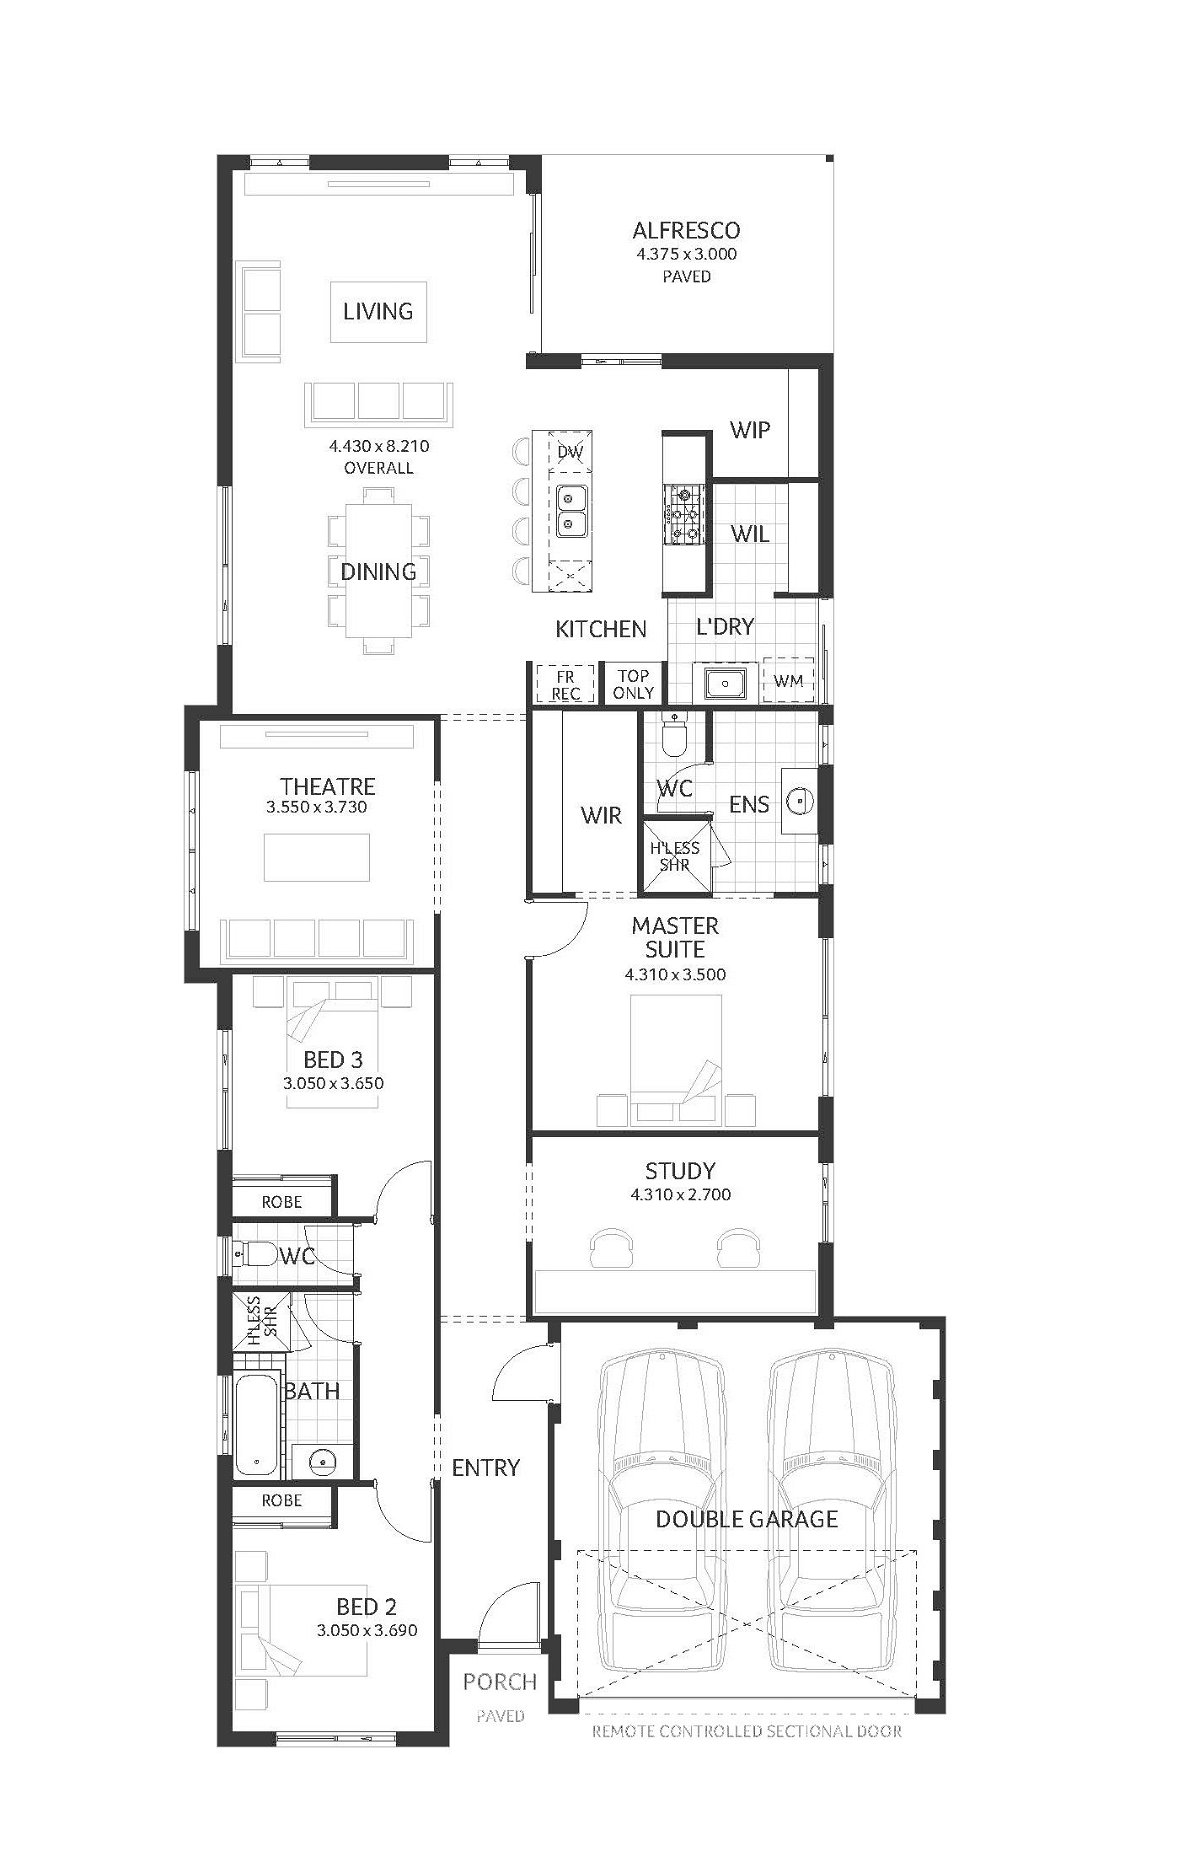 Plunkett Homes - Gracetown | Lifestyle - Floorplan - Gracetown Lifestyle Marketing Plan